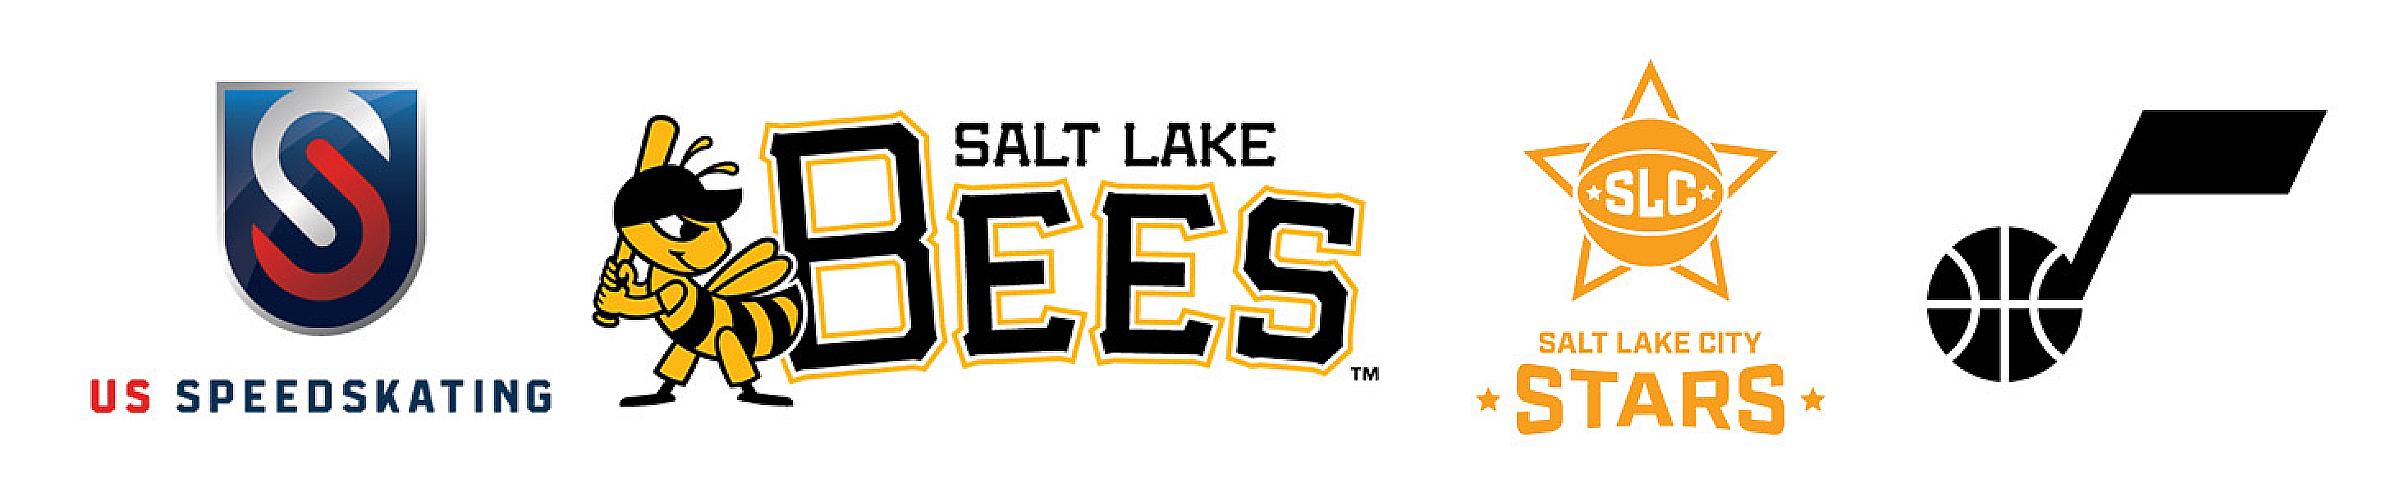 Sports sponsors: US Speed Skating, Salt Lake Bees, Real Salt Lake, Salt Lake City Stars, Utah Jazz, and U of U Sports